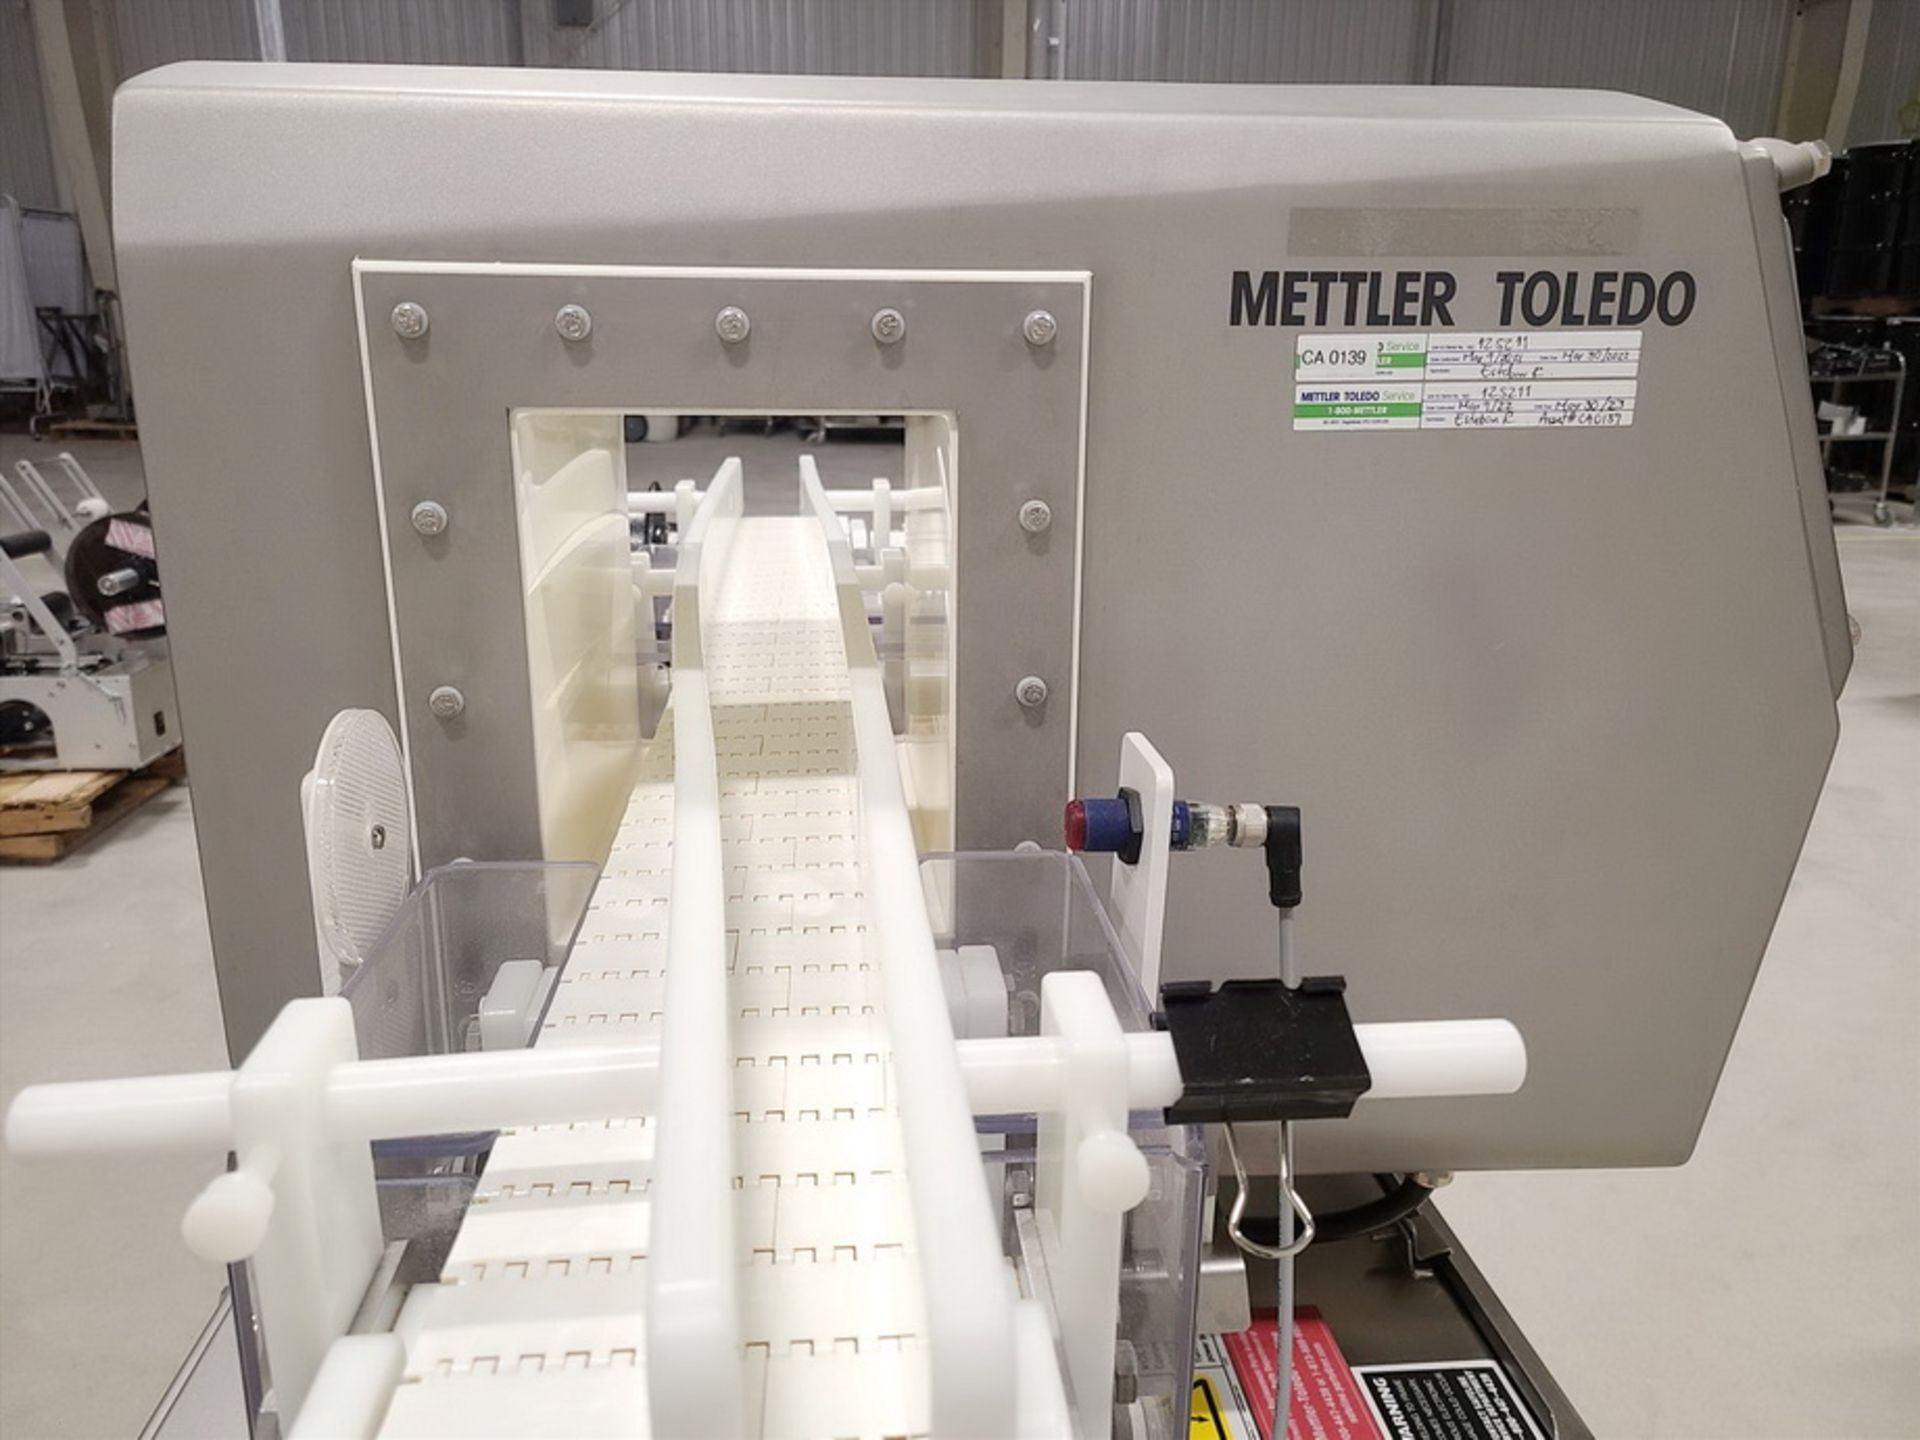 Mettler Toledo metal detector mod. SL1500, ser. no. 8419101 (2015), stainless steel, approx. 6 in. x - Image 2 of 3